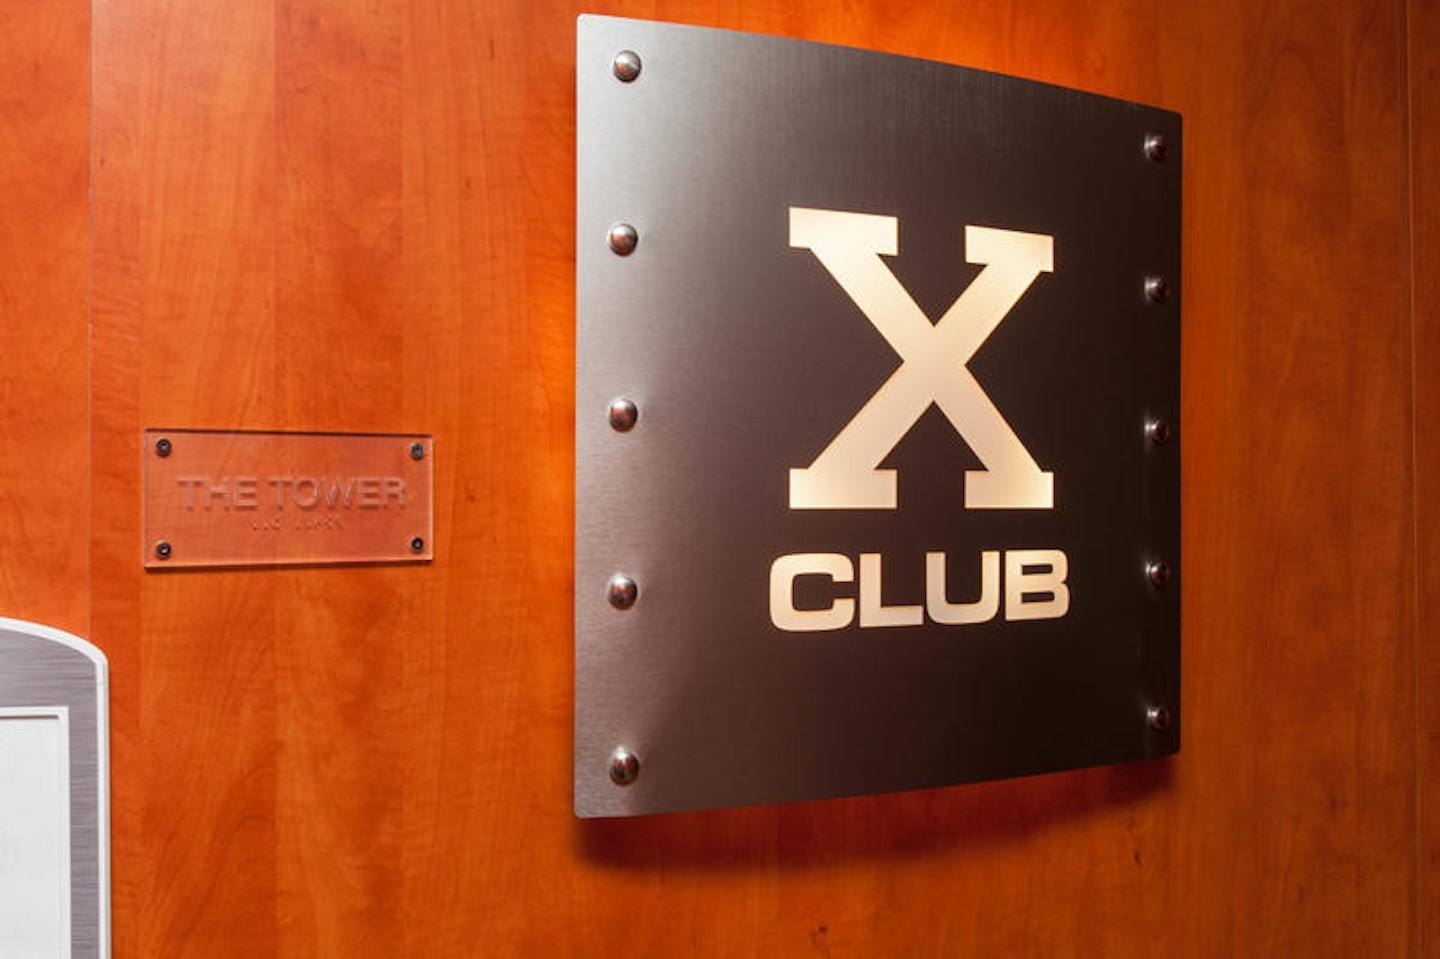 X Club on Celebrity Constellation